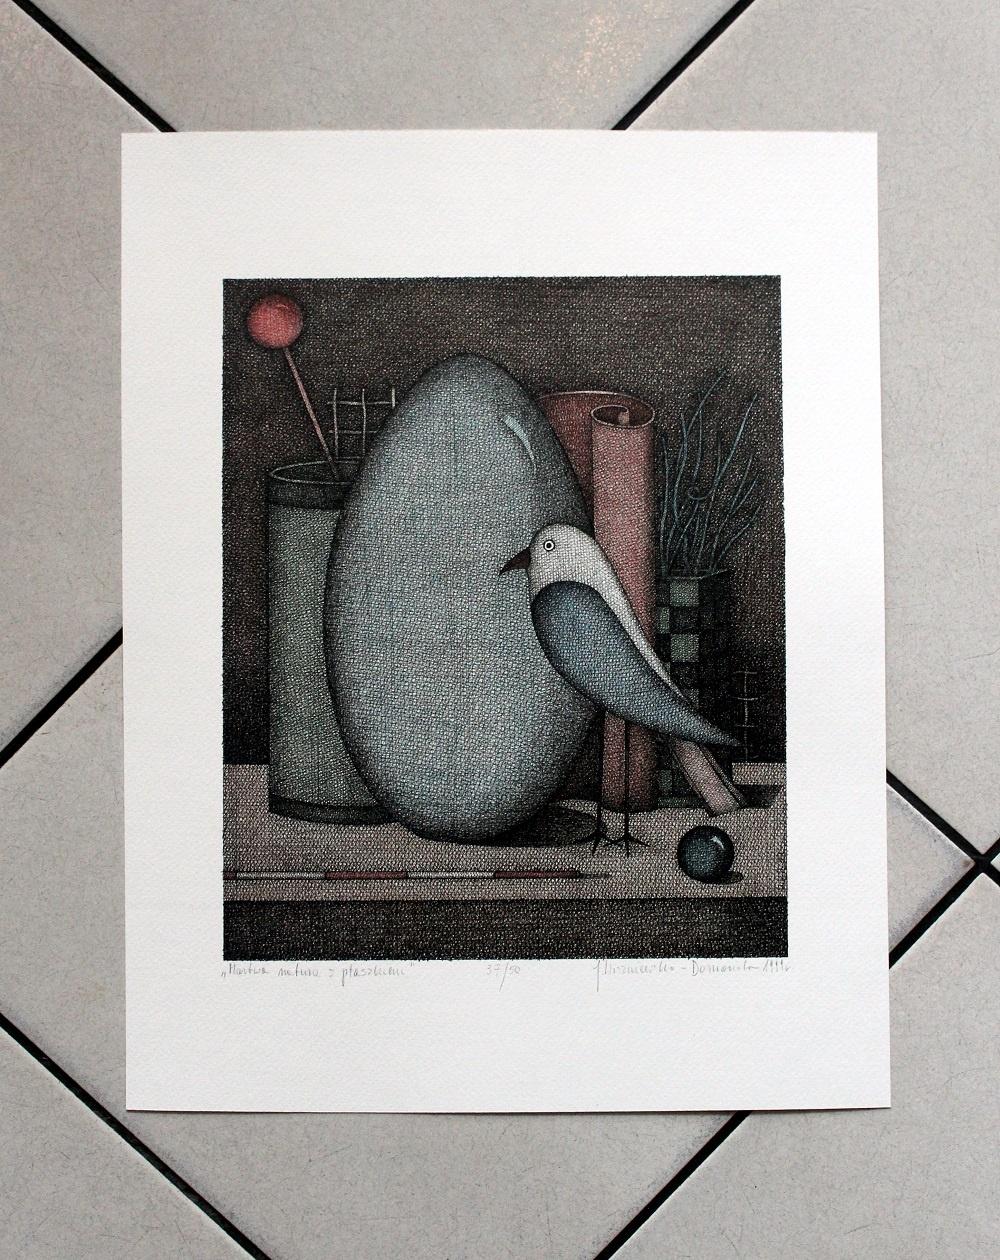 Still life with a bird - XXI century contemporary figurative print - Art by Joanna Wiszniewska-Domanska